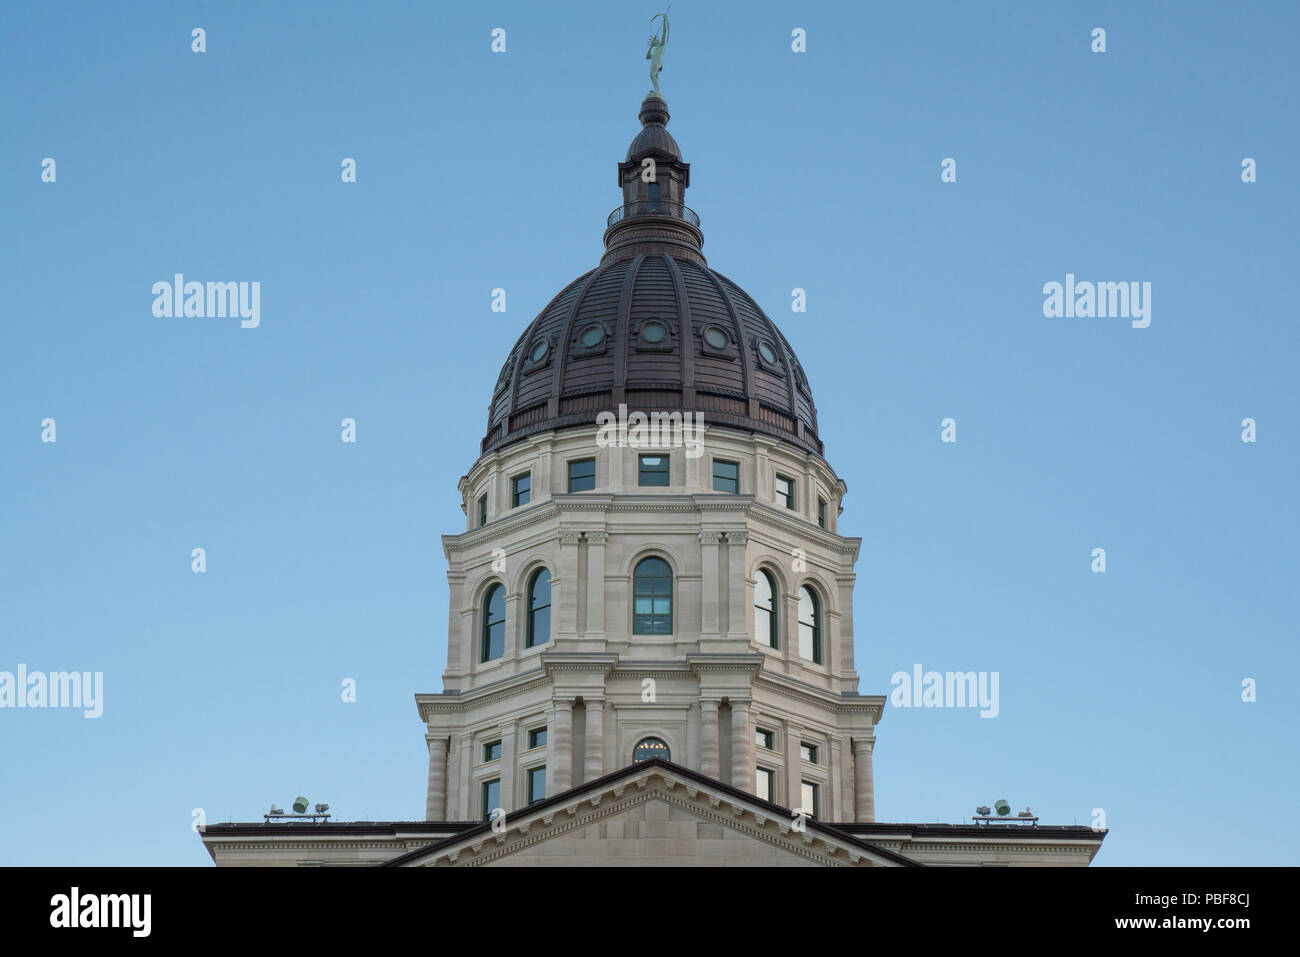 Dome of the Kansas Capital Building in Topeka, Kansas Stock Photo